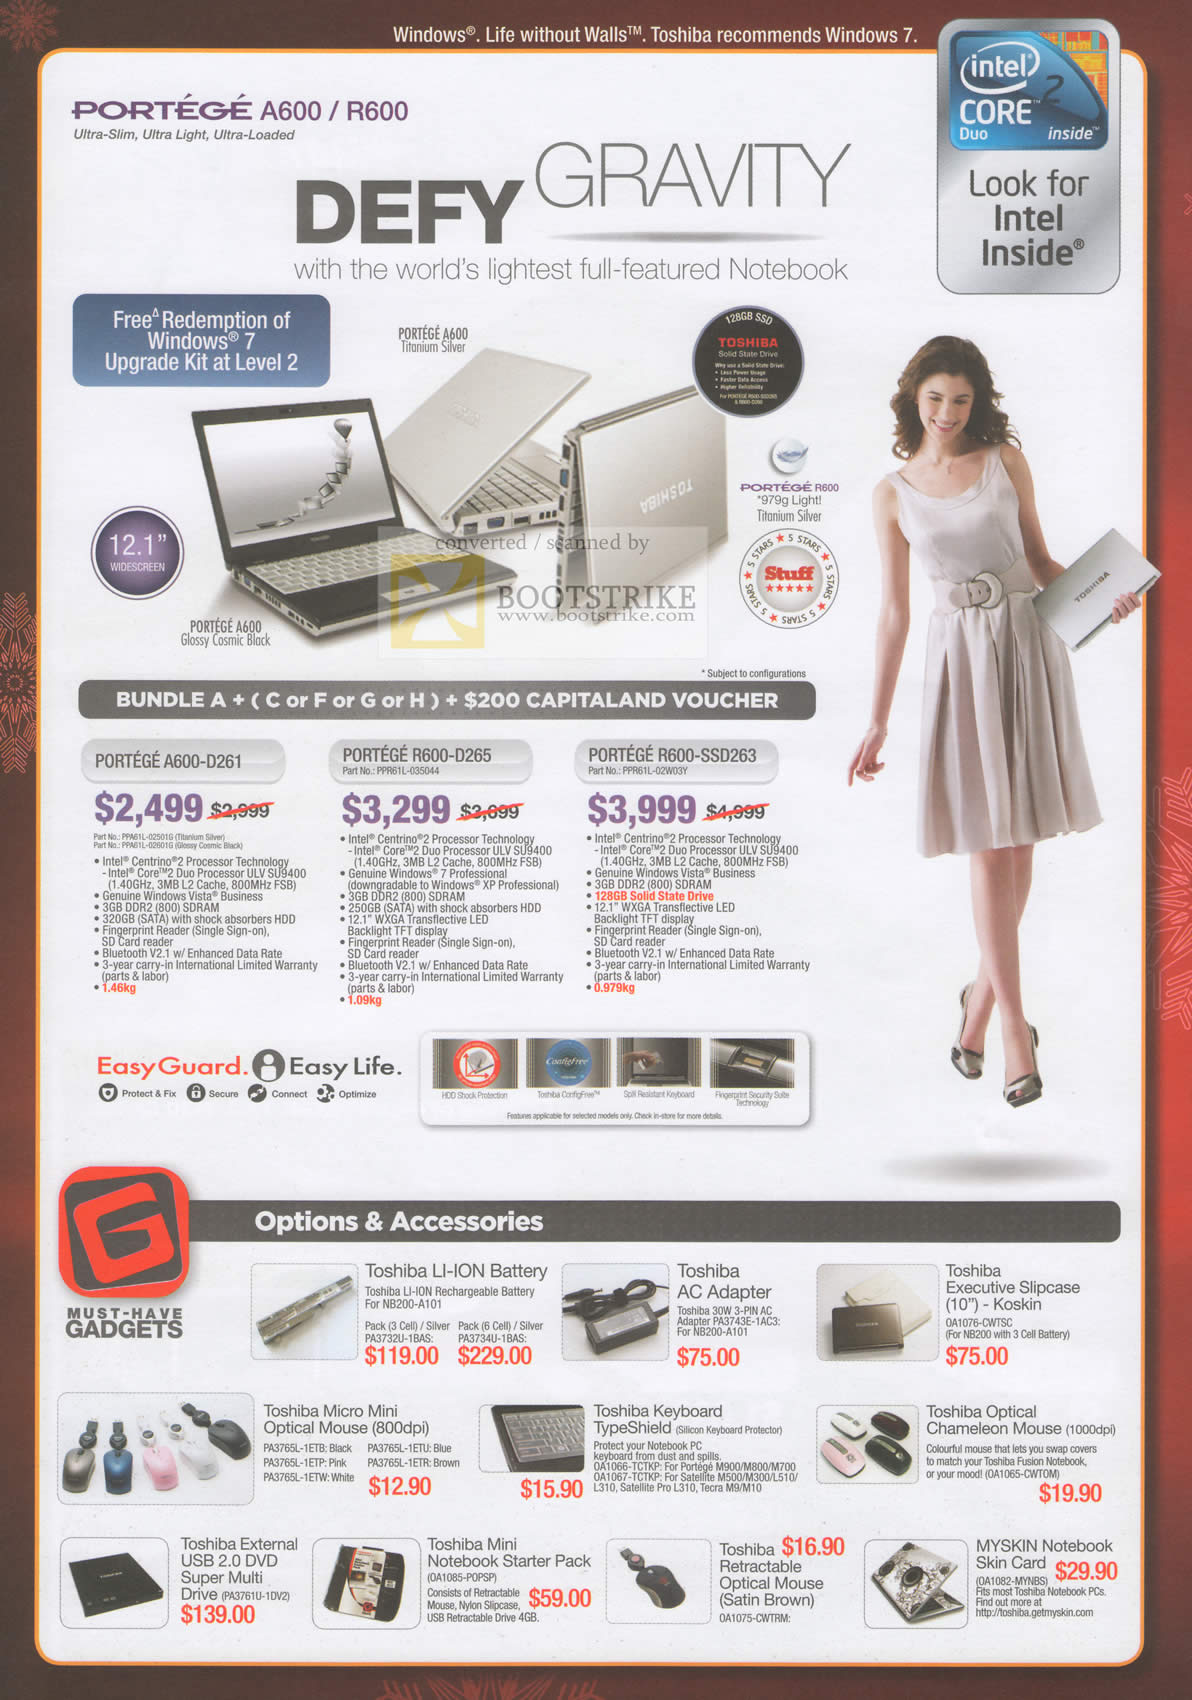 Sitex 2009 price list image brochure of Toshiba Portege A600 D261 R600 D265 SSD263 Notebooks Accessories